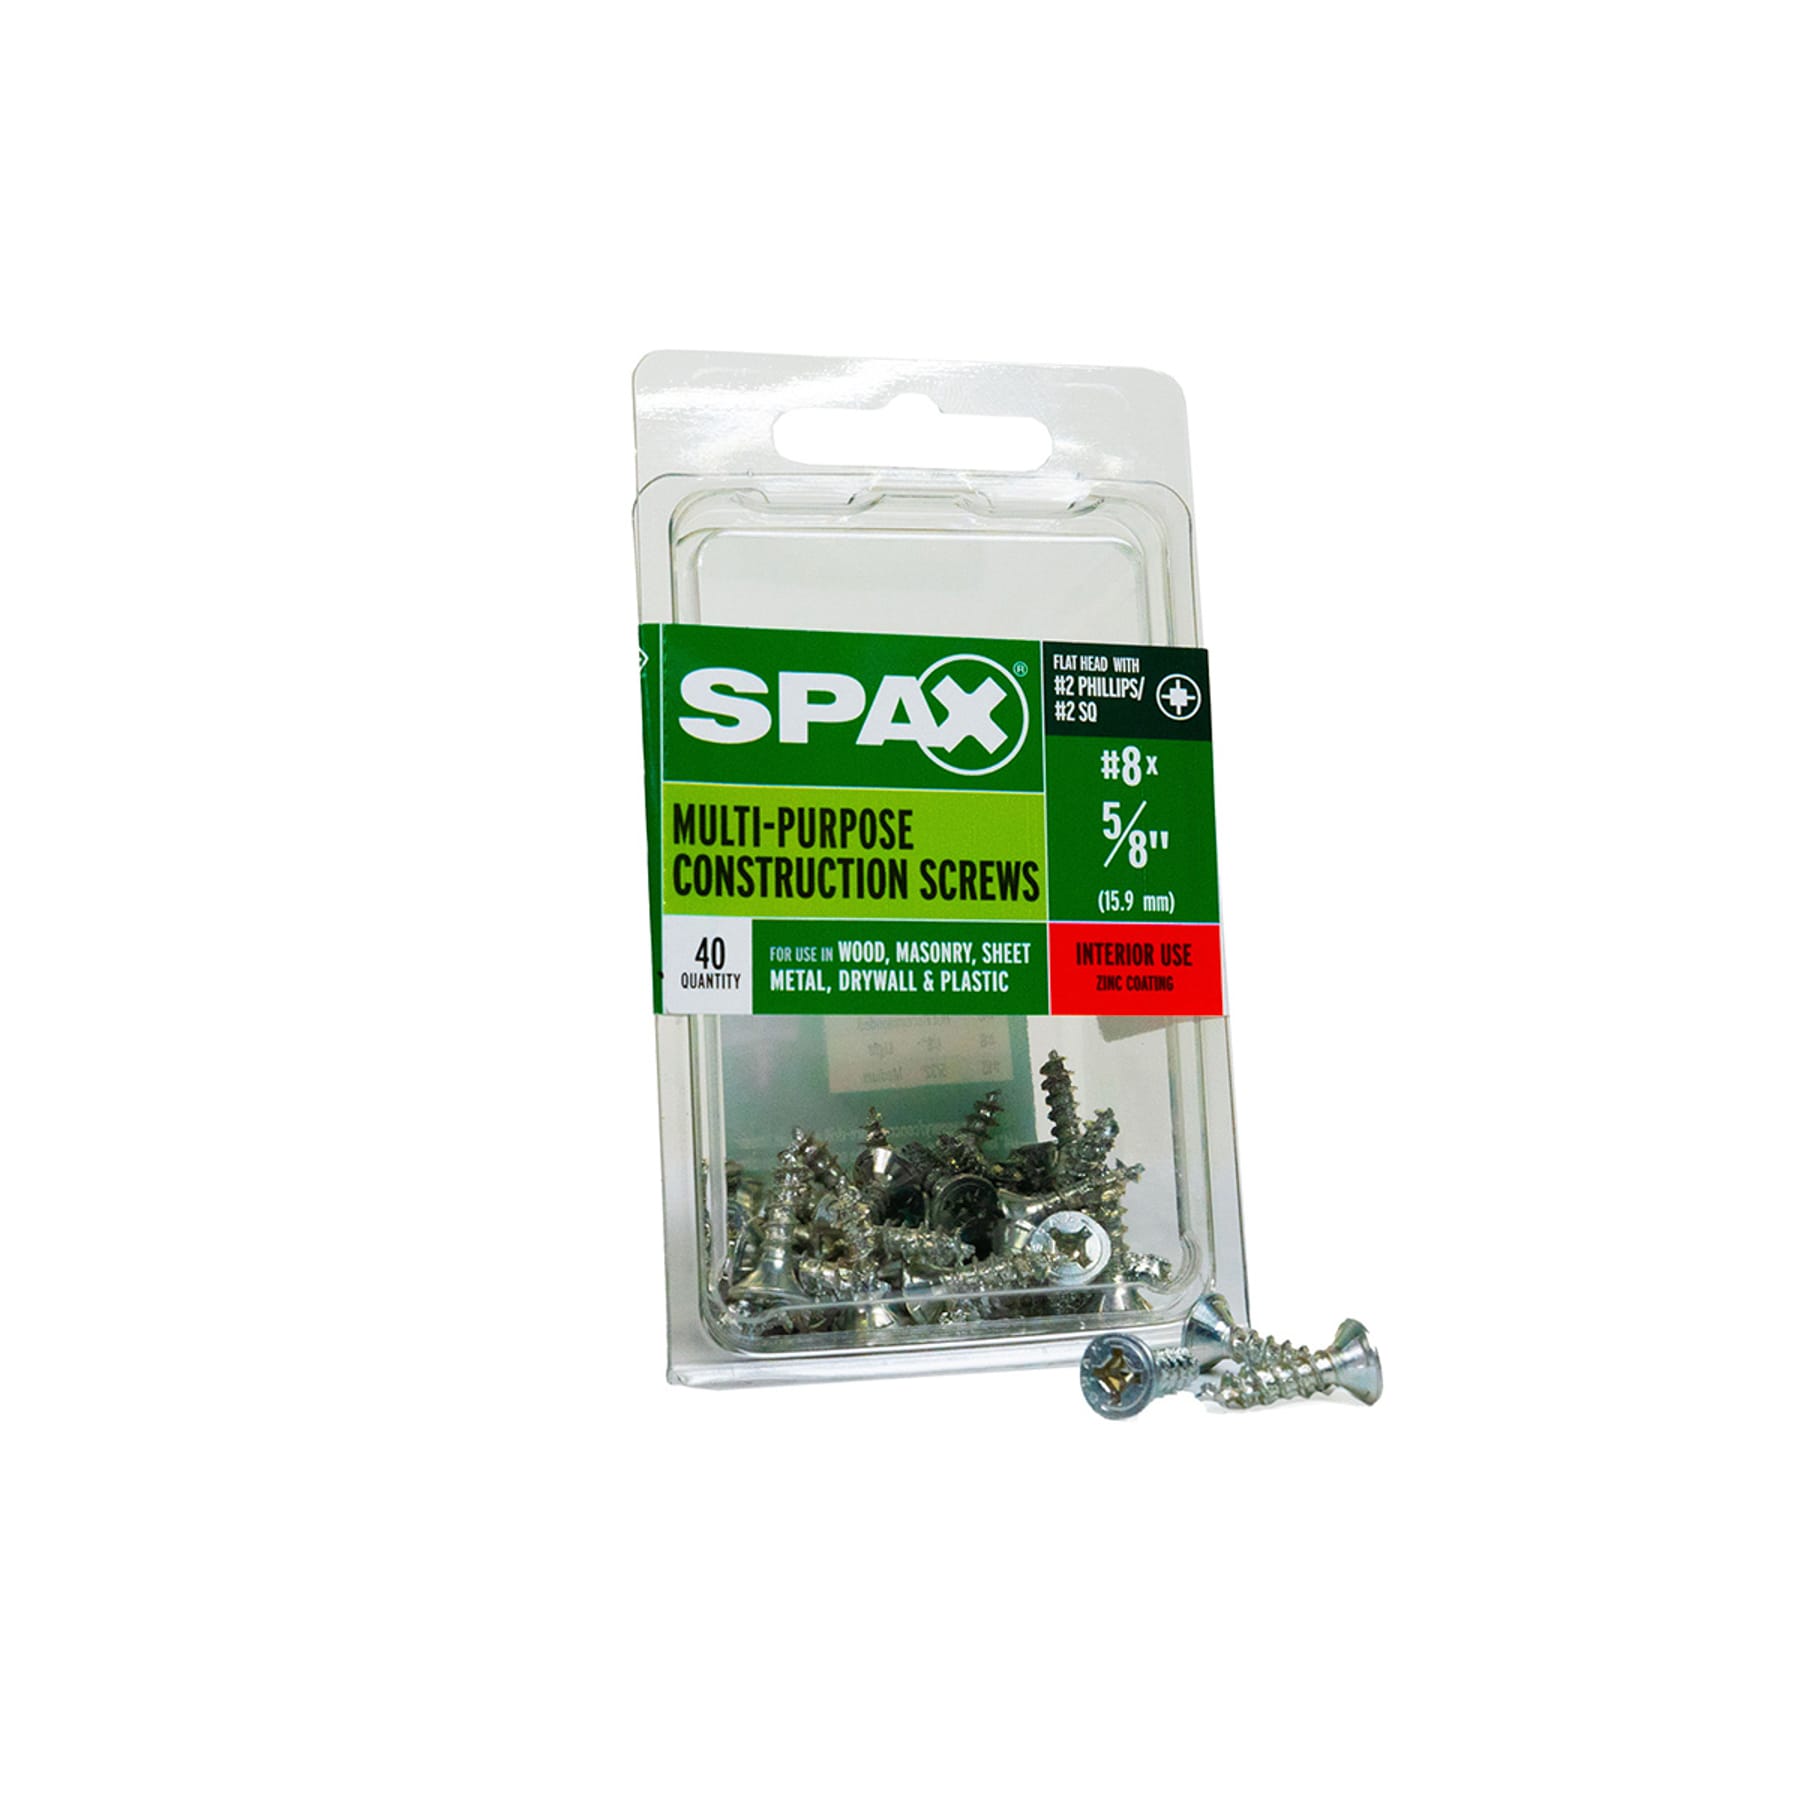 Spax Constrution Screws, Zinc Plated, 5/8 - 40 pack